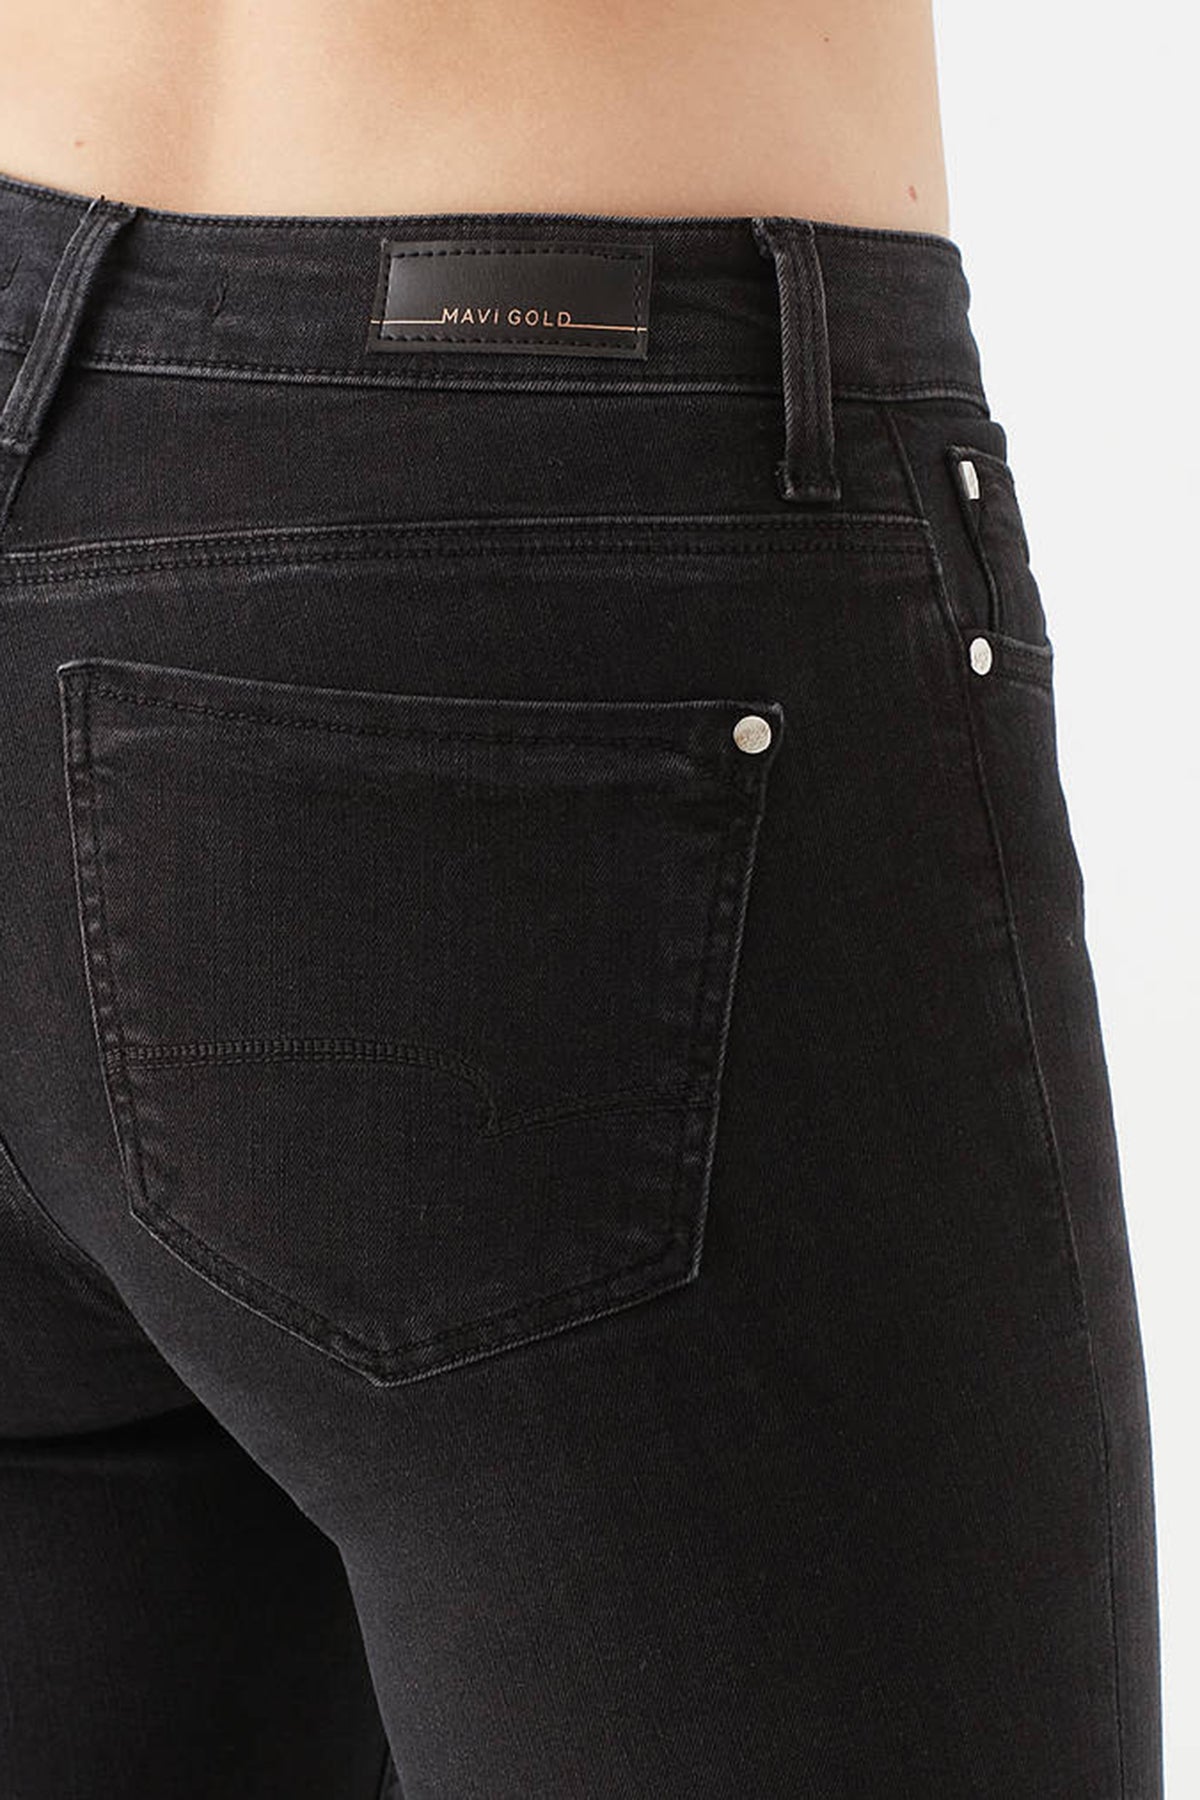 Mavi Yüksek Bel Skinny Pamuklu Tess Jeans Bayan Kot Pantolon 100328-31910 SİYAH